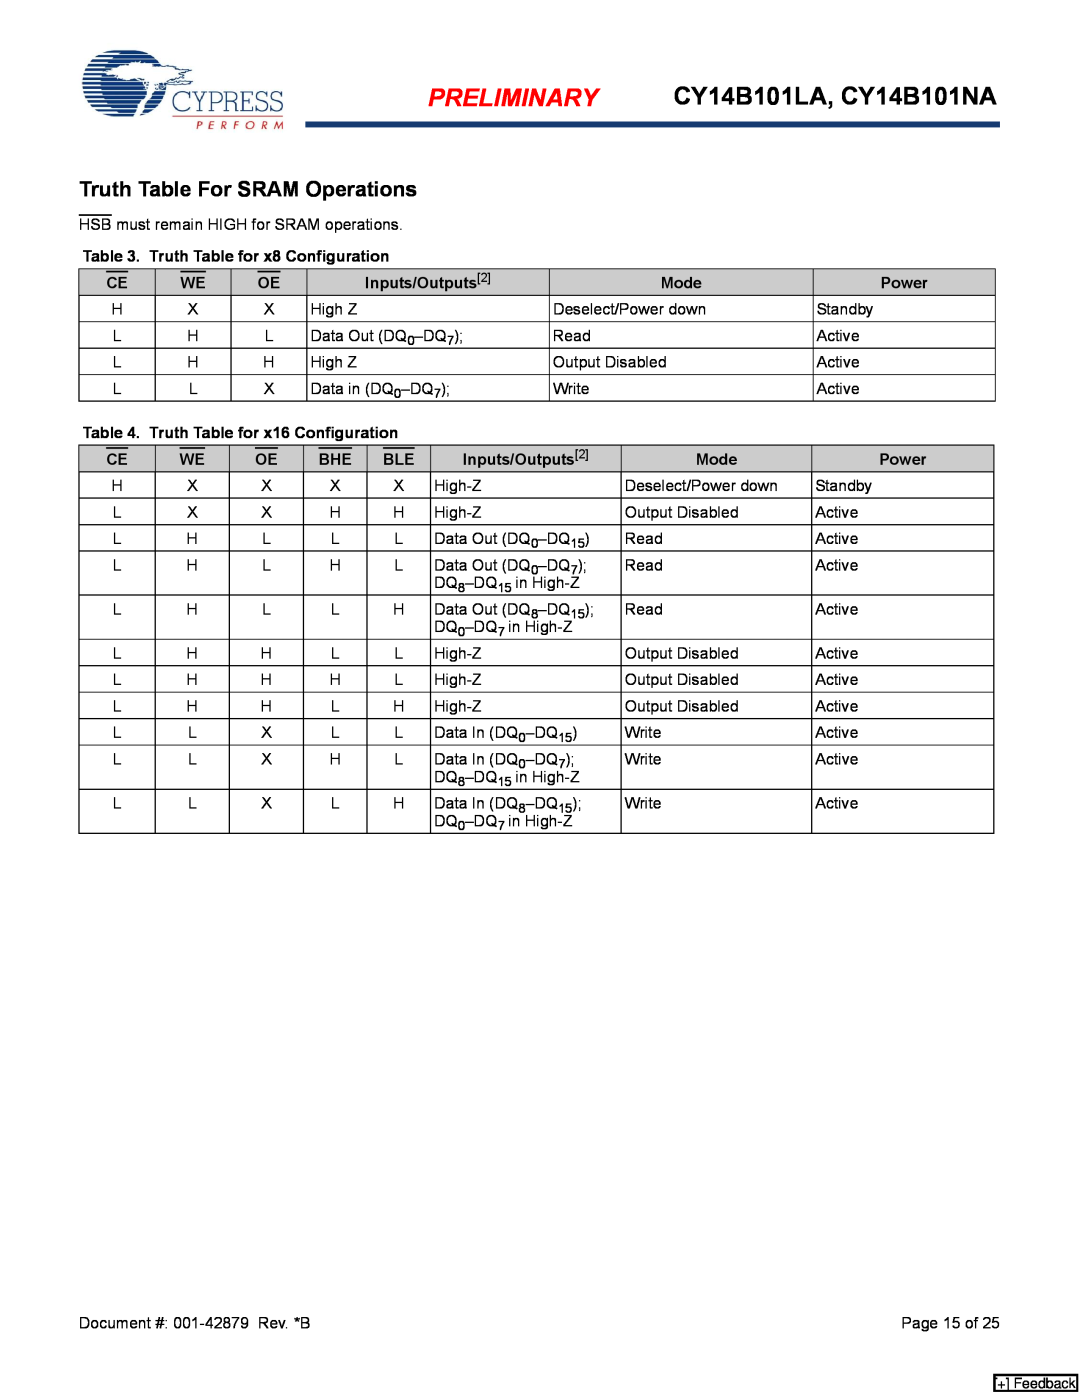 Cypress manual Truth Table For SRAM Operations, PRELIMINARY CY14B101LA, CY14B101NA 